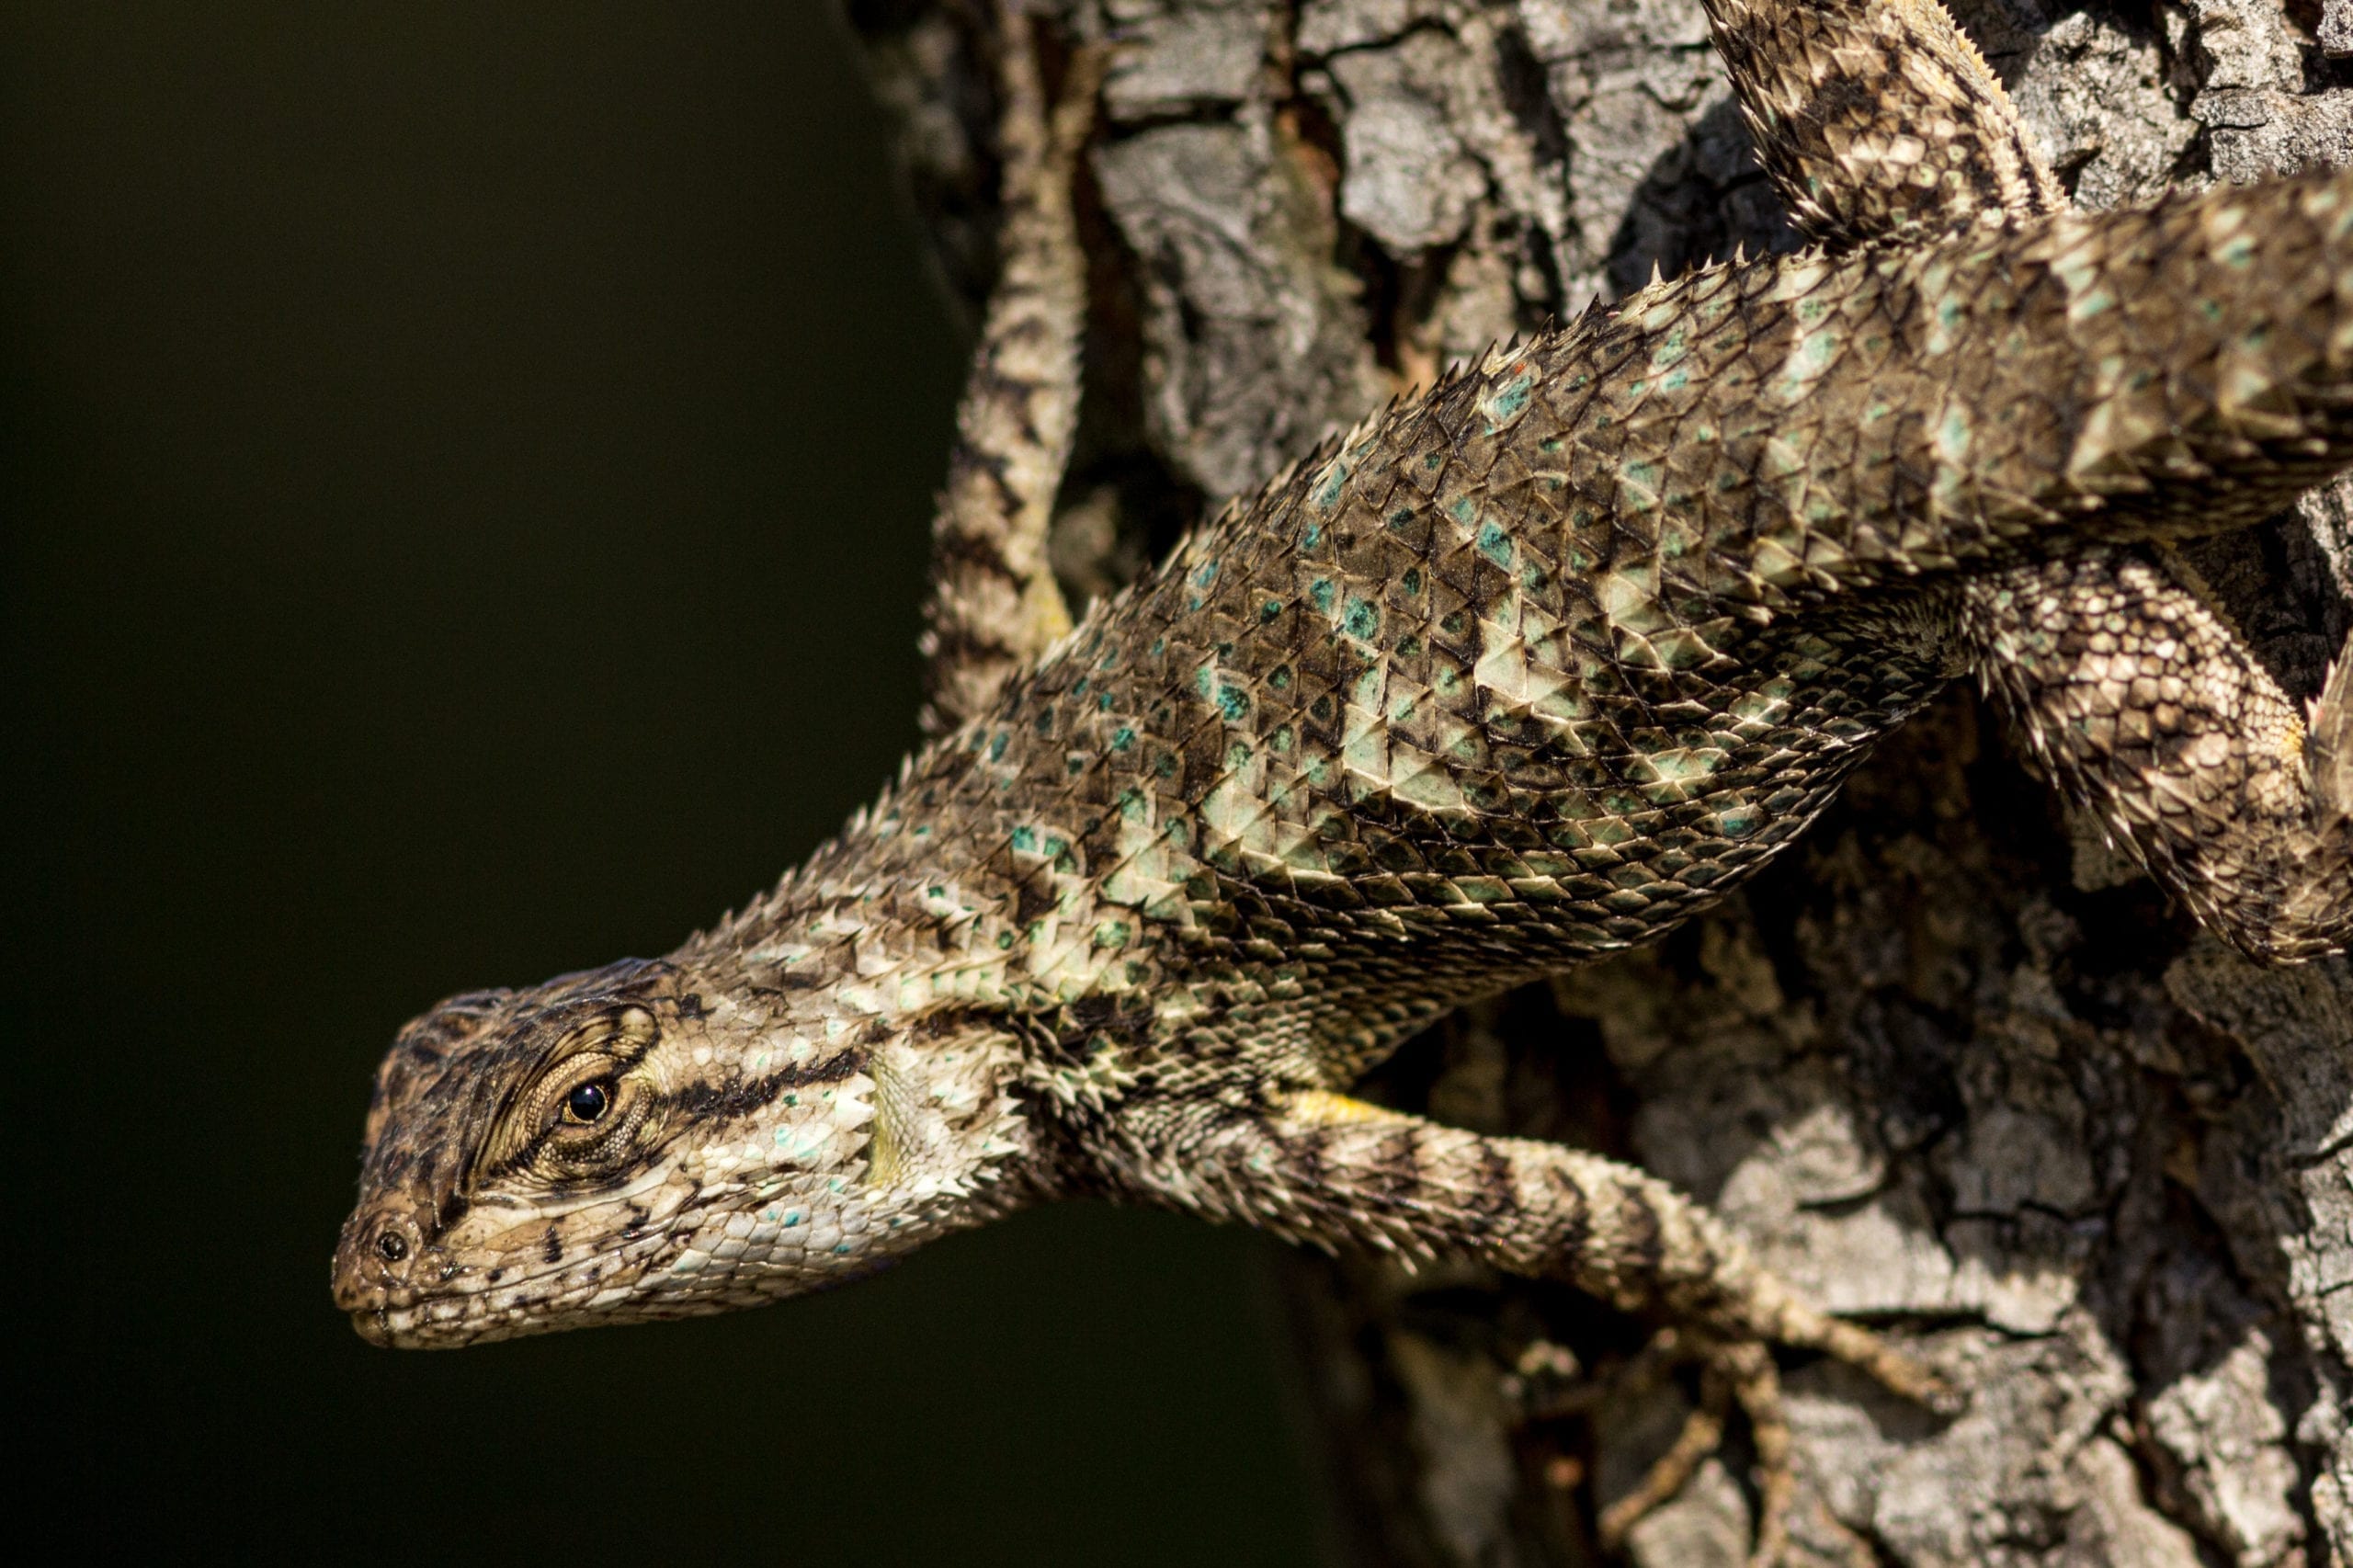 Garden lizard. Photo by Robert Moran.